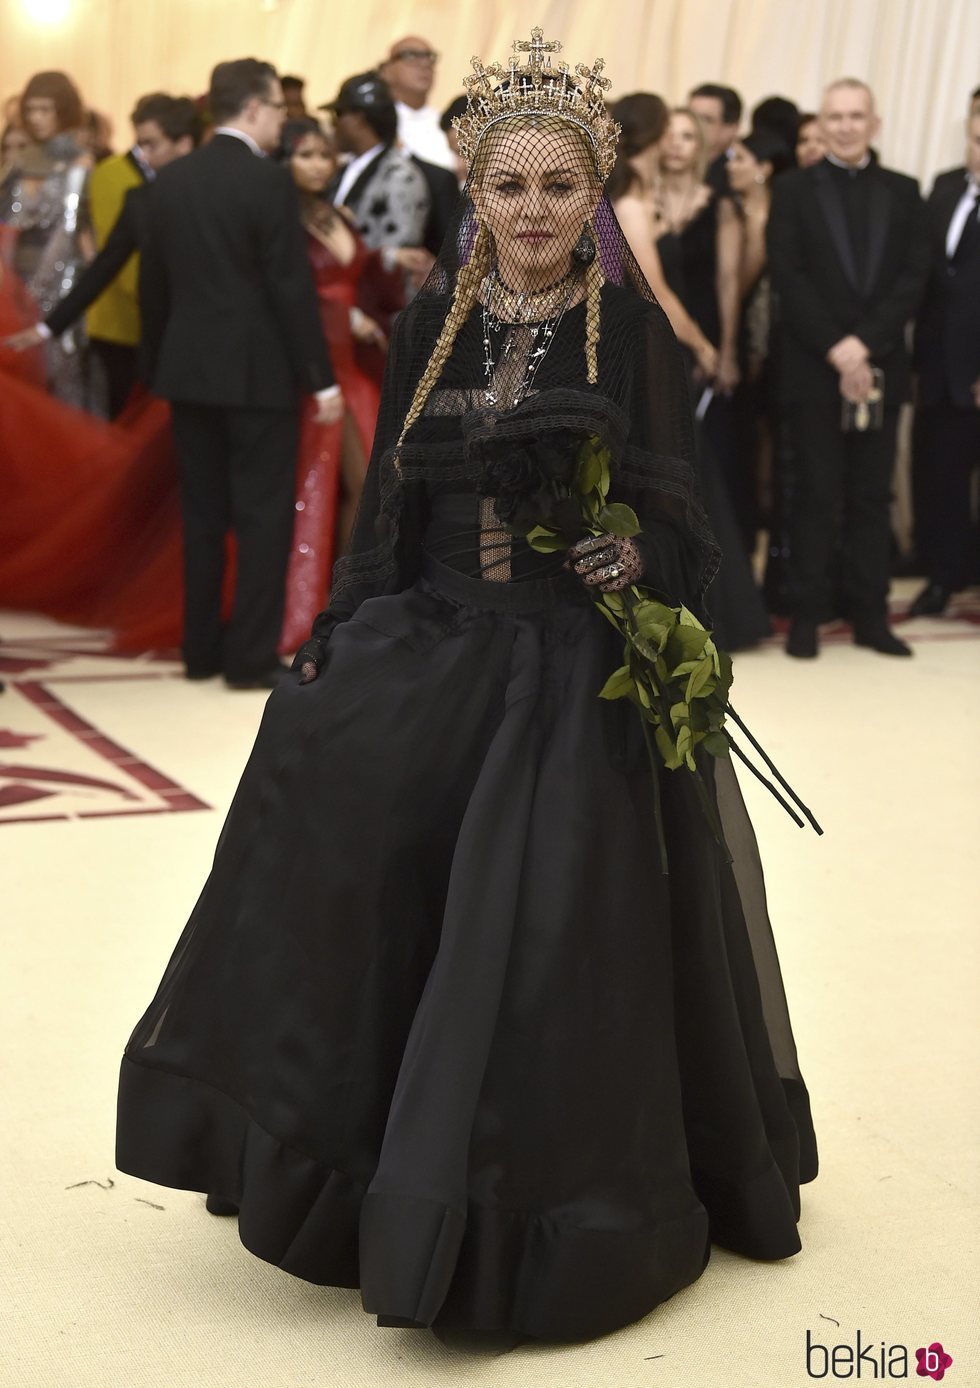 Madonna en la alfombra roja de la Gala MET 2018